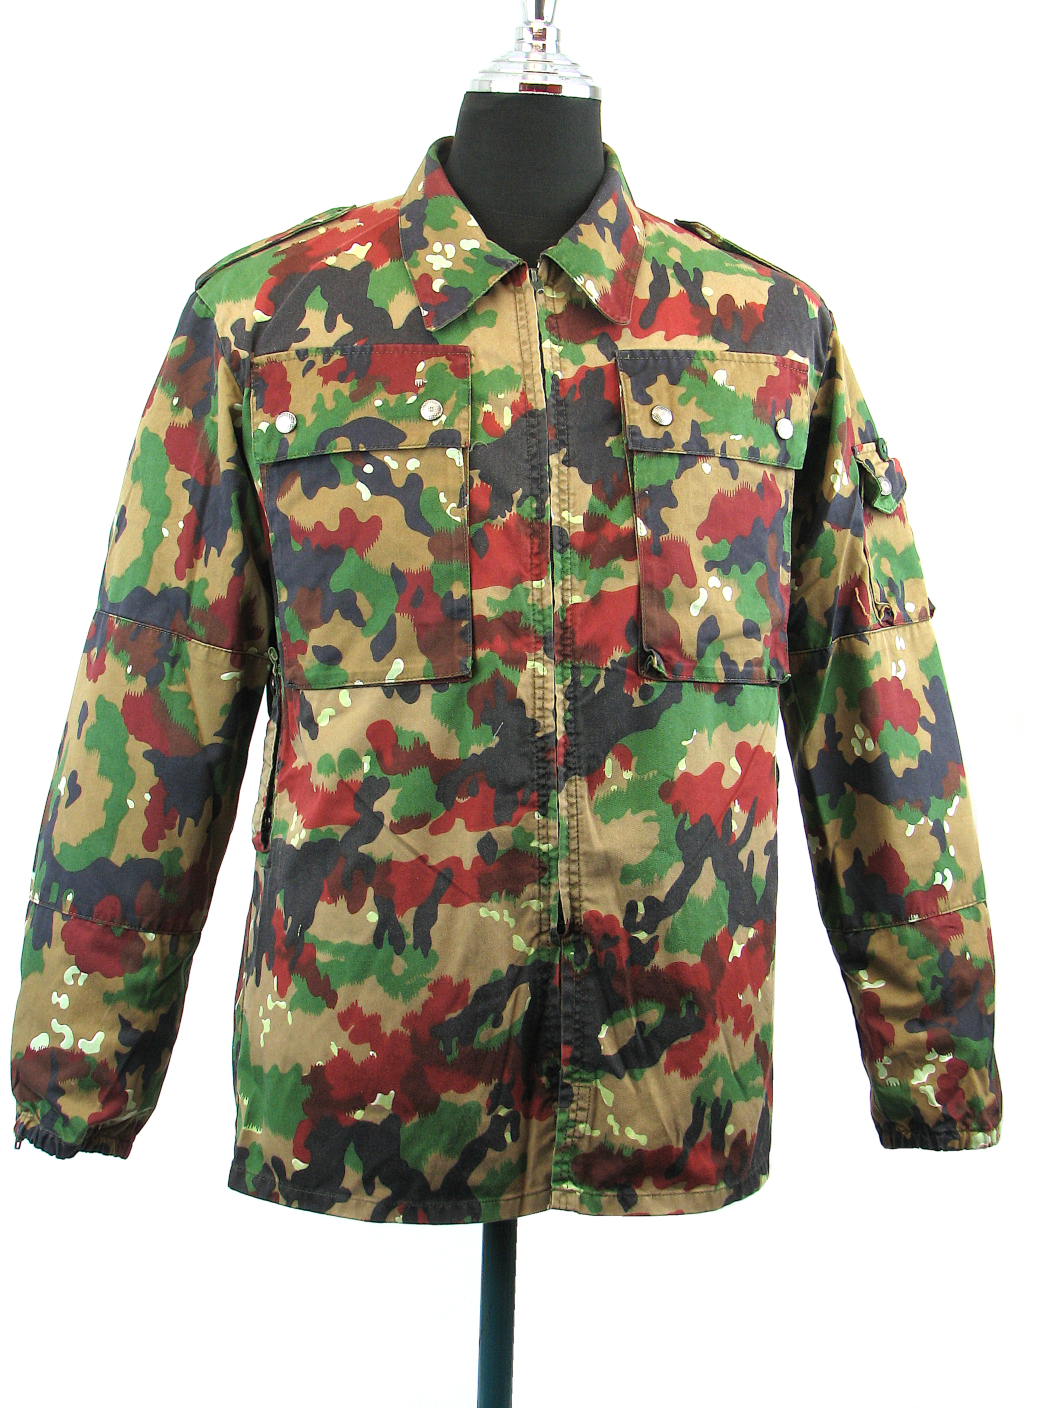 Swiss Army M83 Alpenflage Zip Shirt SRT11 | Comrades